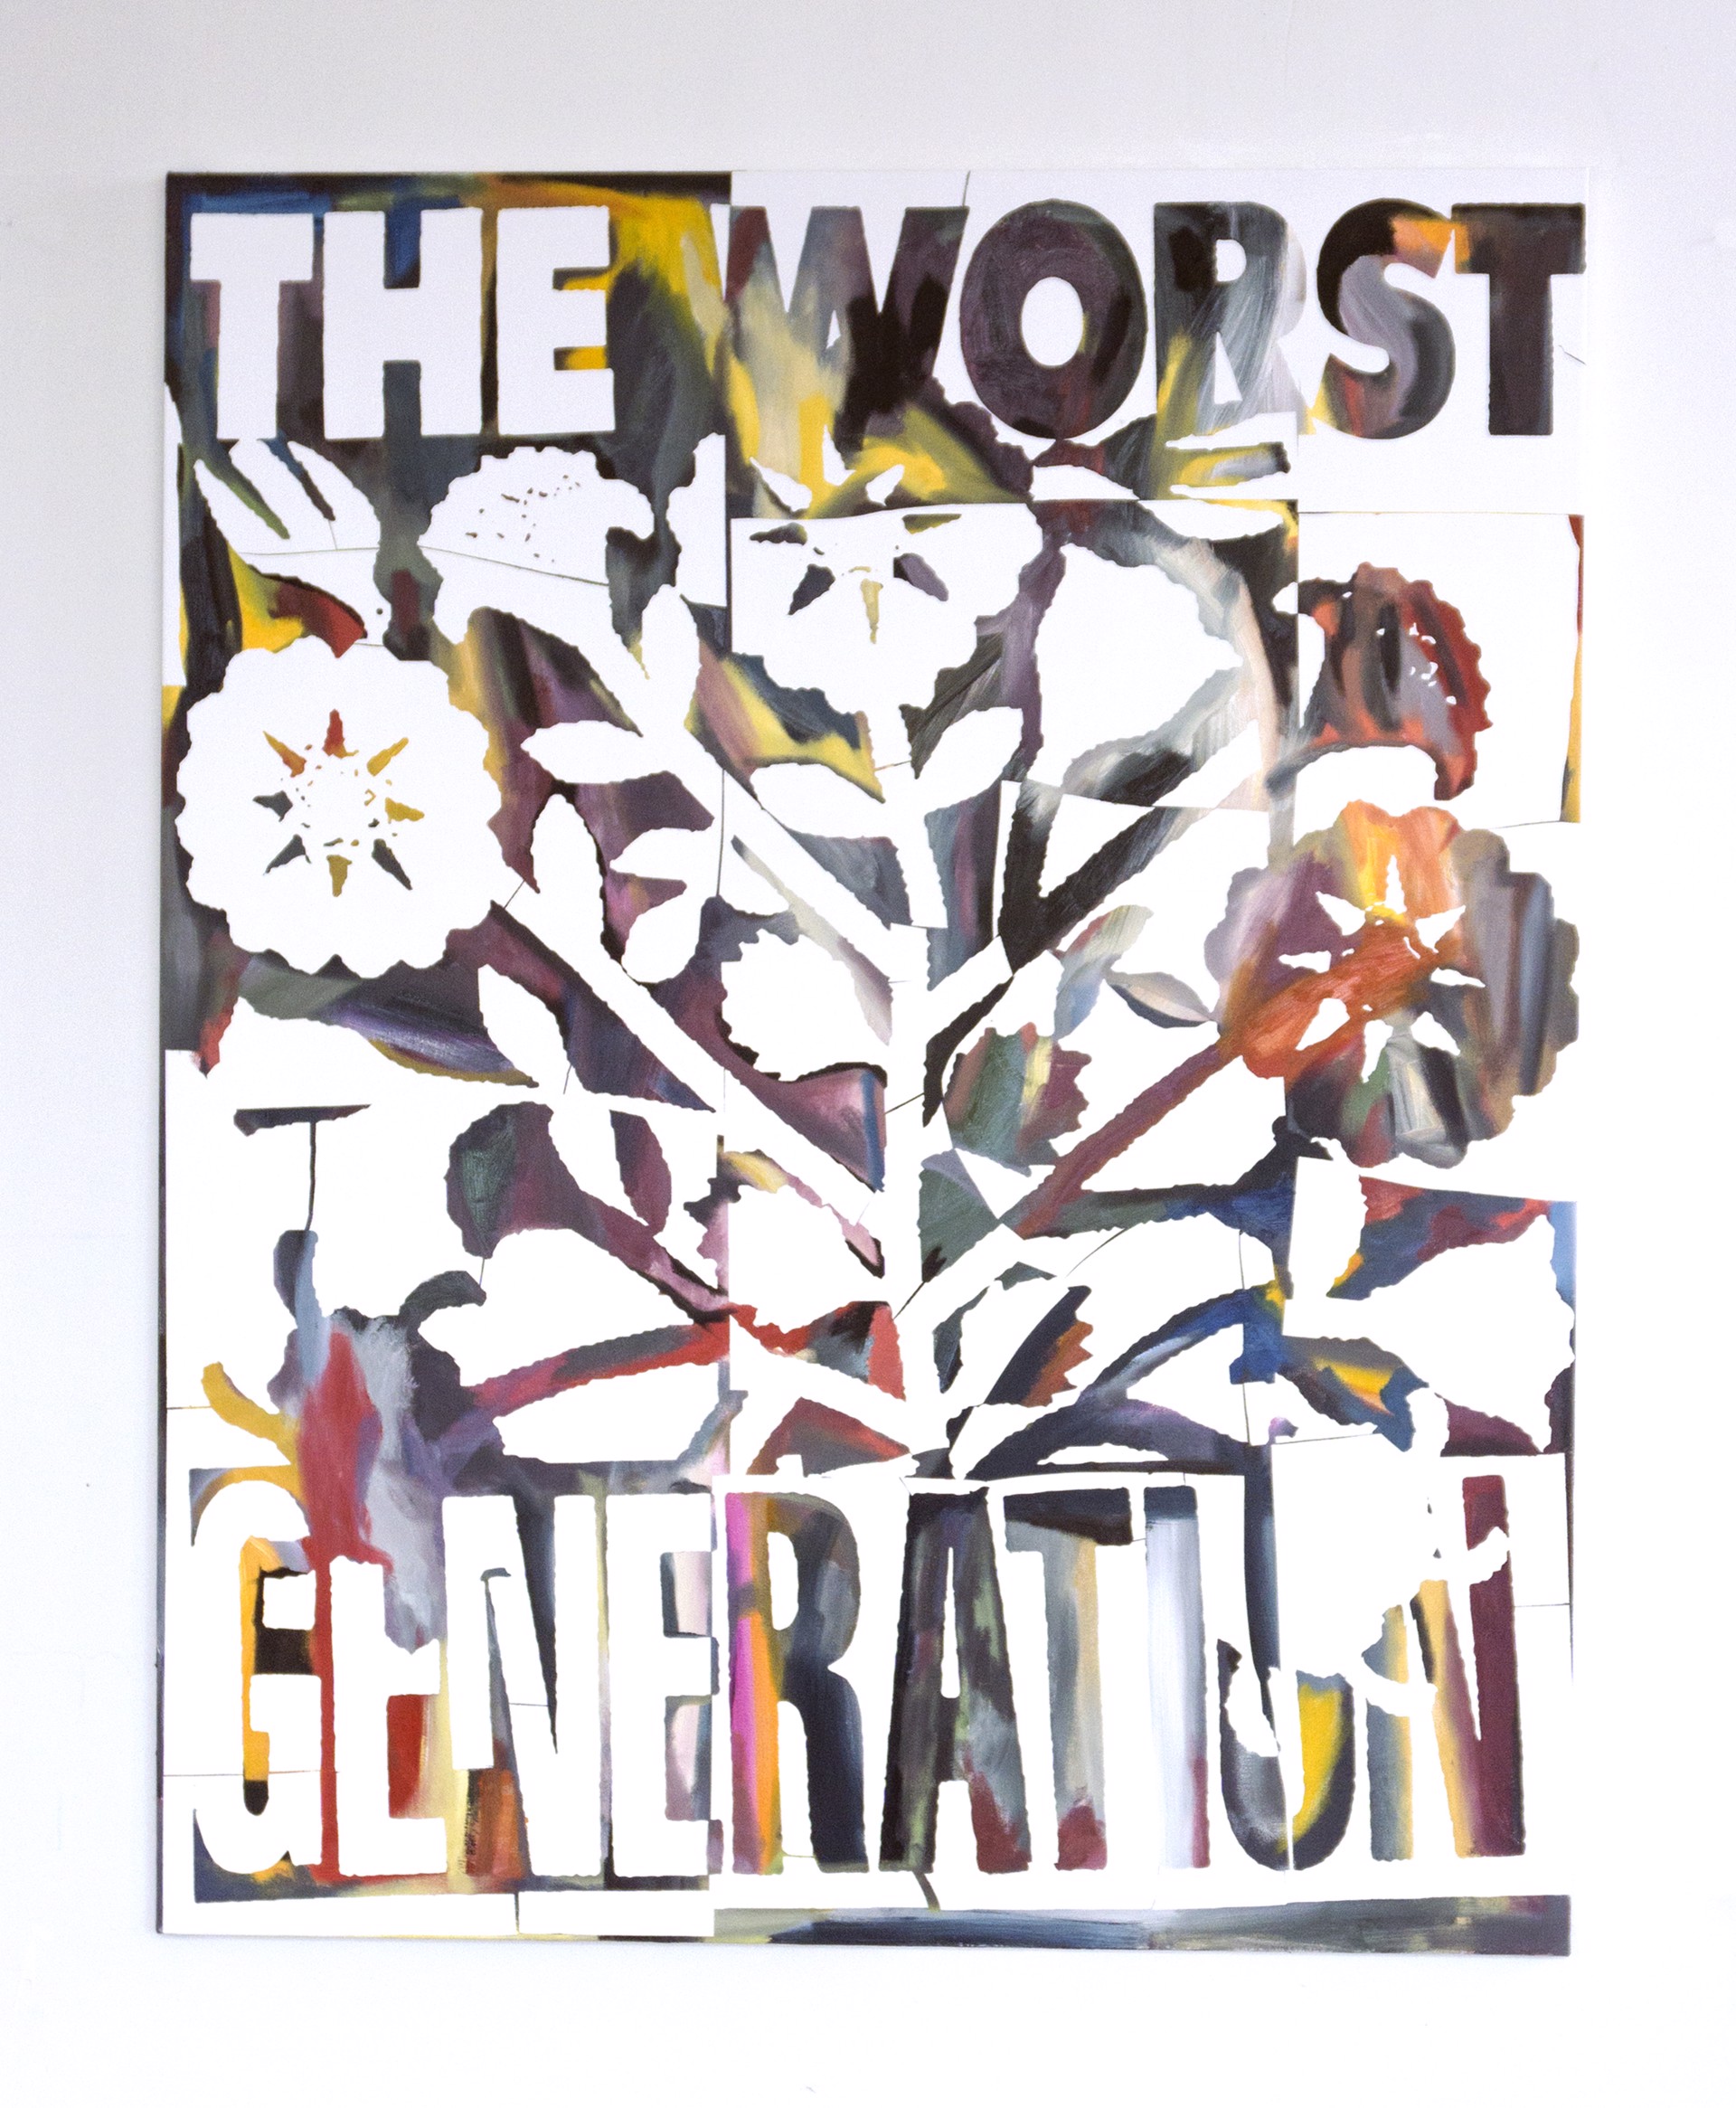 THE WORST GENERATION by B. Thom Stevenson